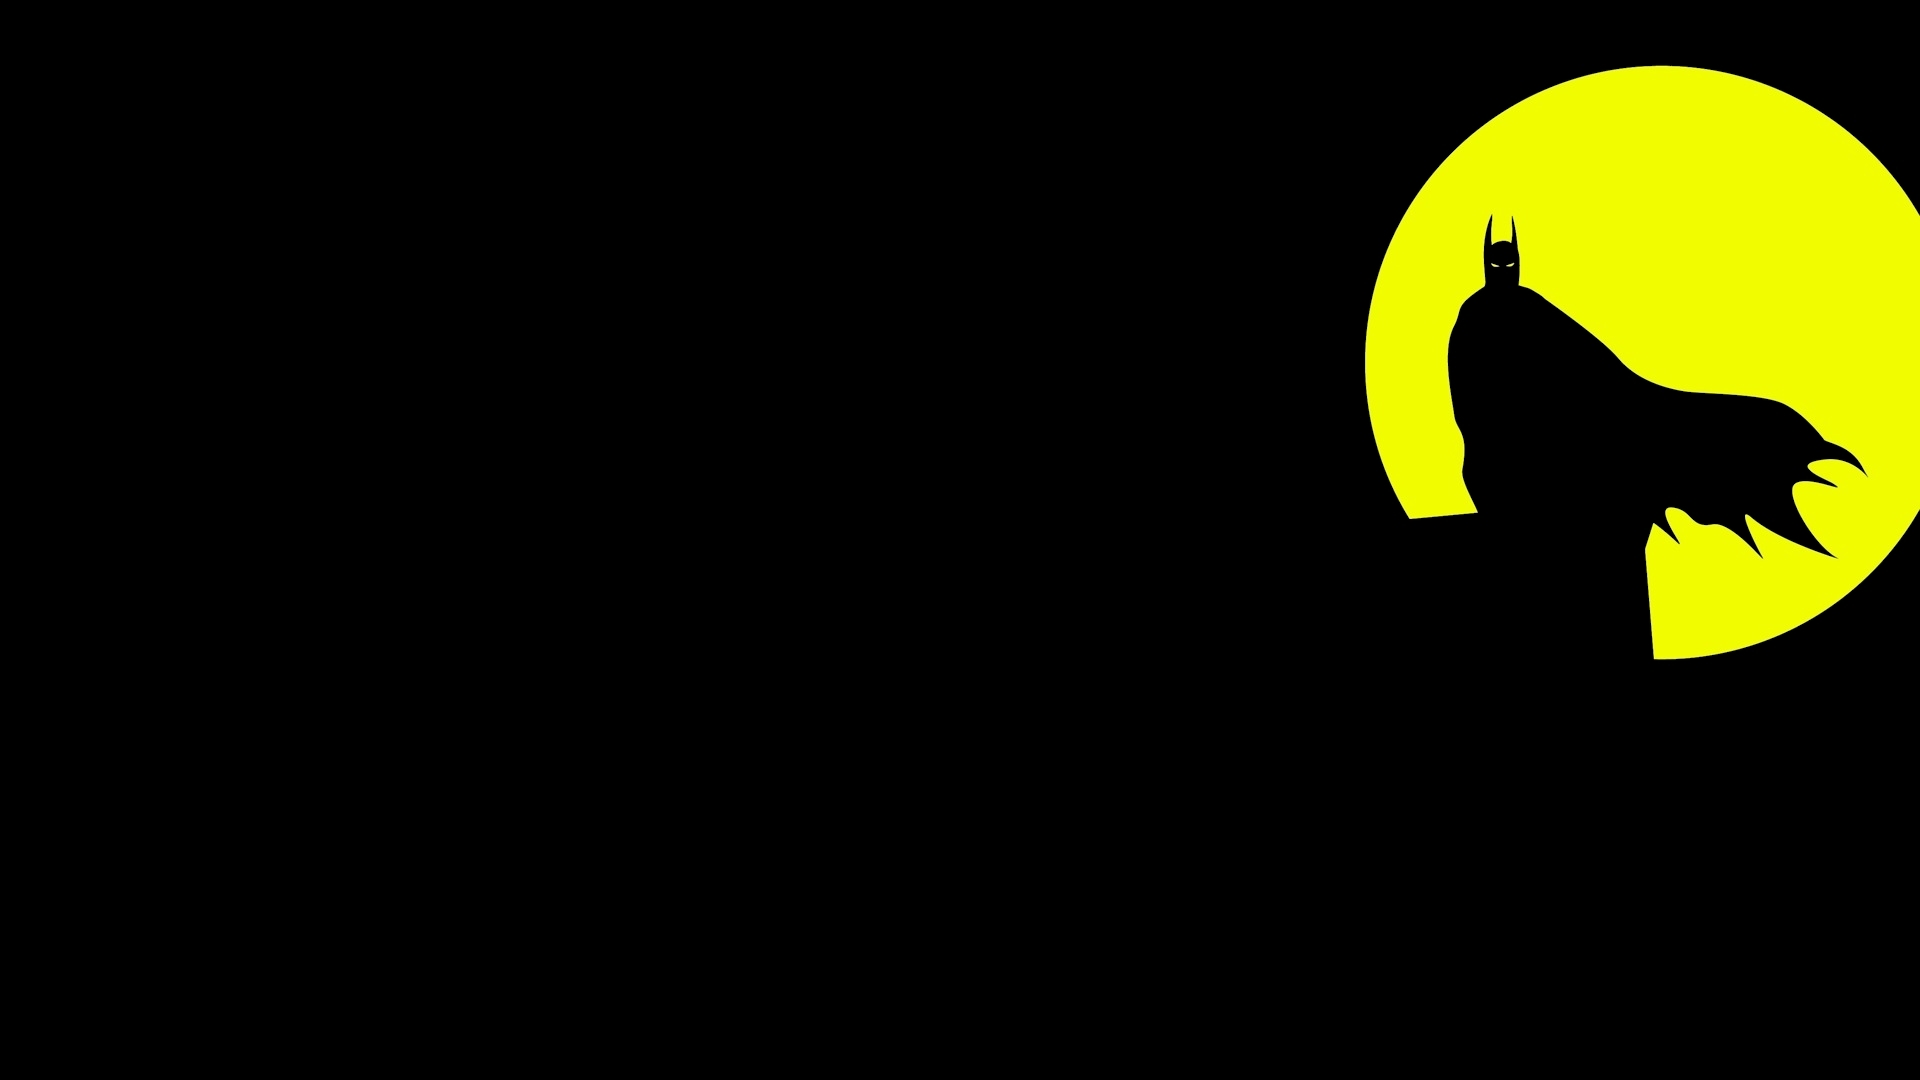 Free download Wallpaper batman silhouette batman the moon a raincoat  wallpapers [1920x1080] for your Desktop, Mobile & Tablet | Explore 48+  Batman PC Wallpaper | Batman Wallpaper, Wallpapers Pc, Wallpaper Batman